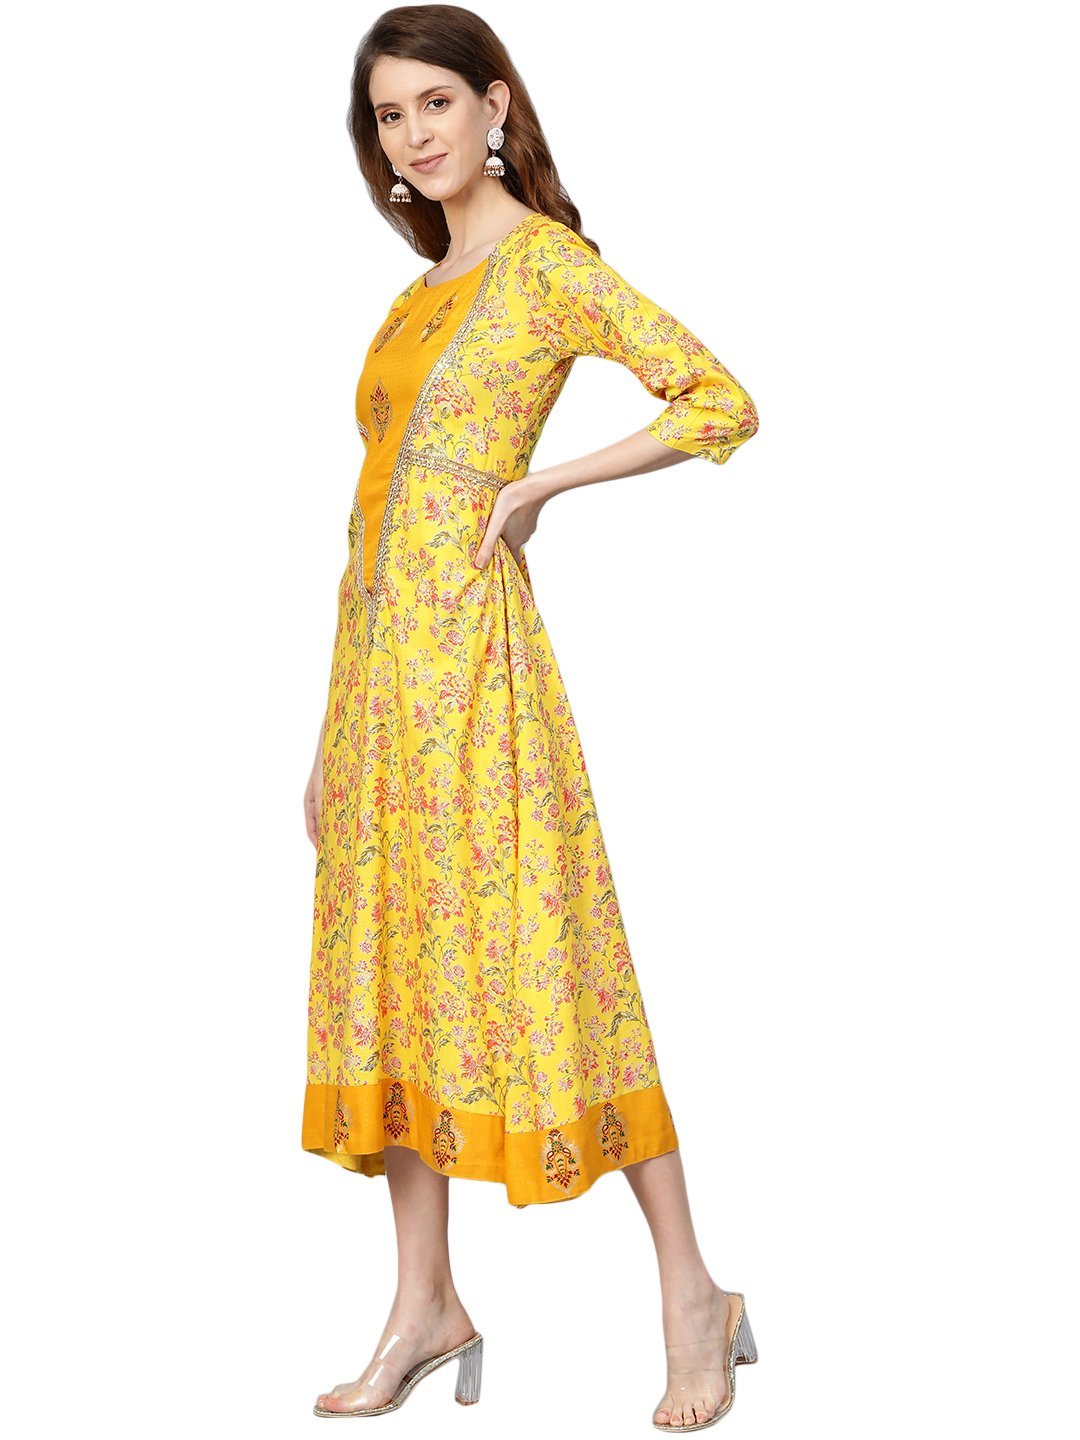 Women's Yellow Printed 3/4 Sleeve Cotton Slub Round Neck Casual Dress - Myshka